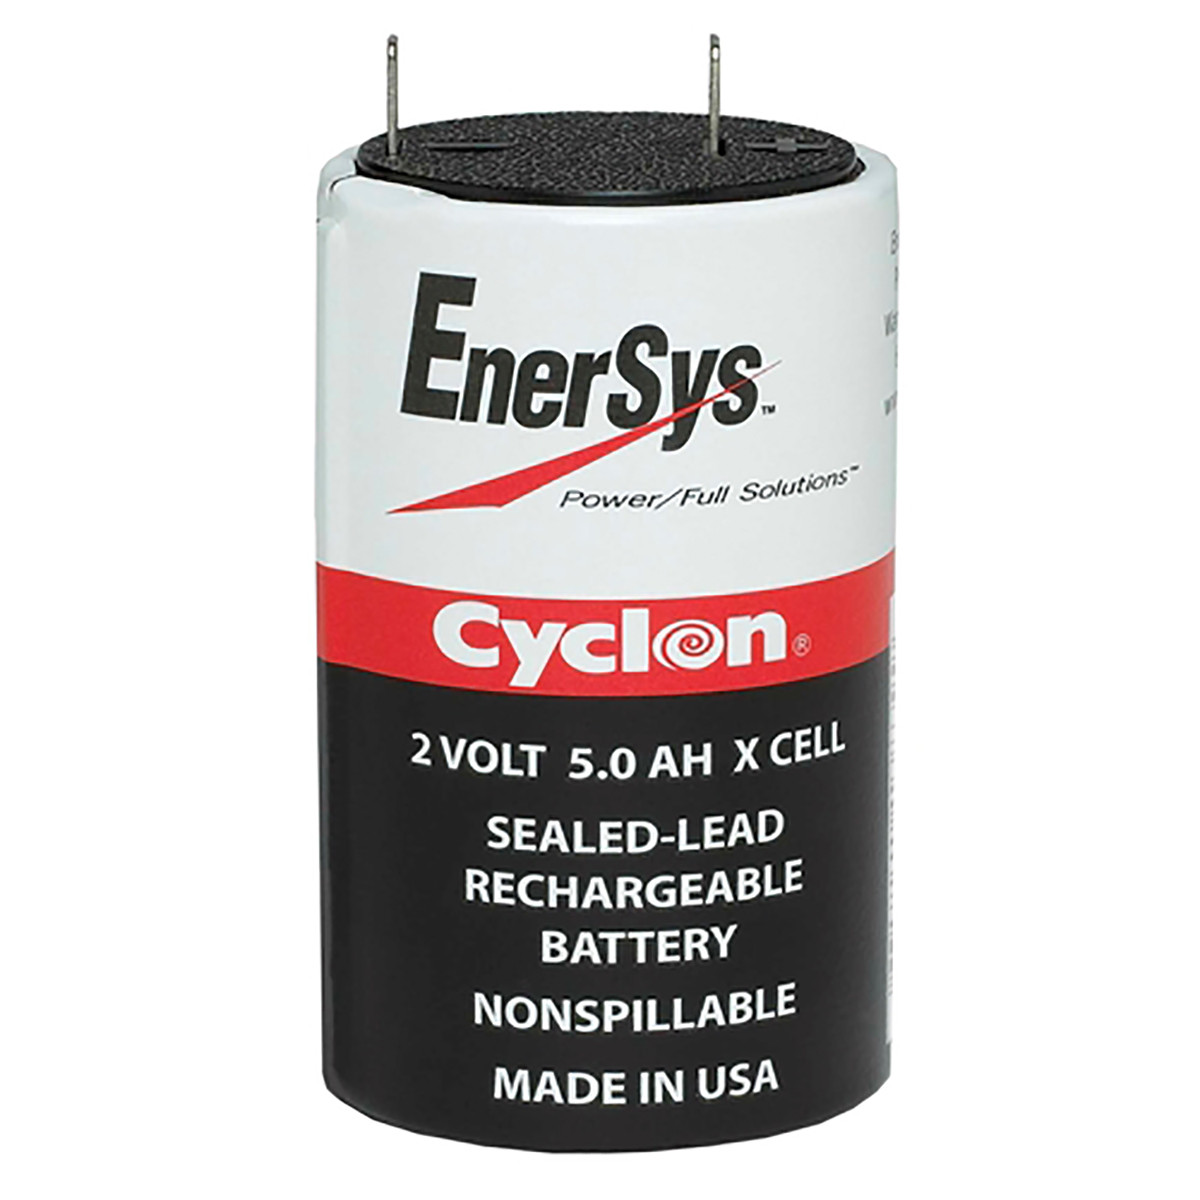 Battery x. ENERSYS. Cyclone Force аккумуляторы. Cyclon 2v 8.0Ah e Cell. Батарея 2 вольта ENERSYS купить.